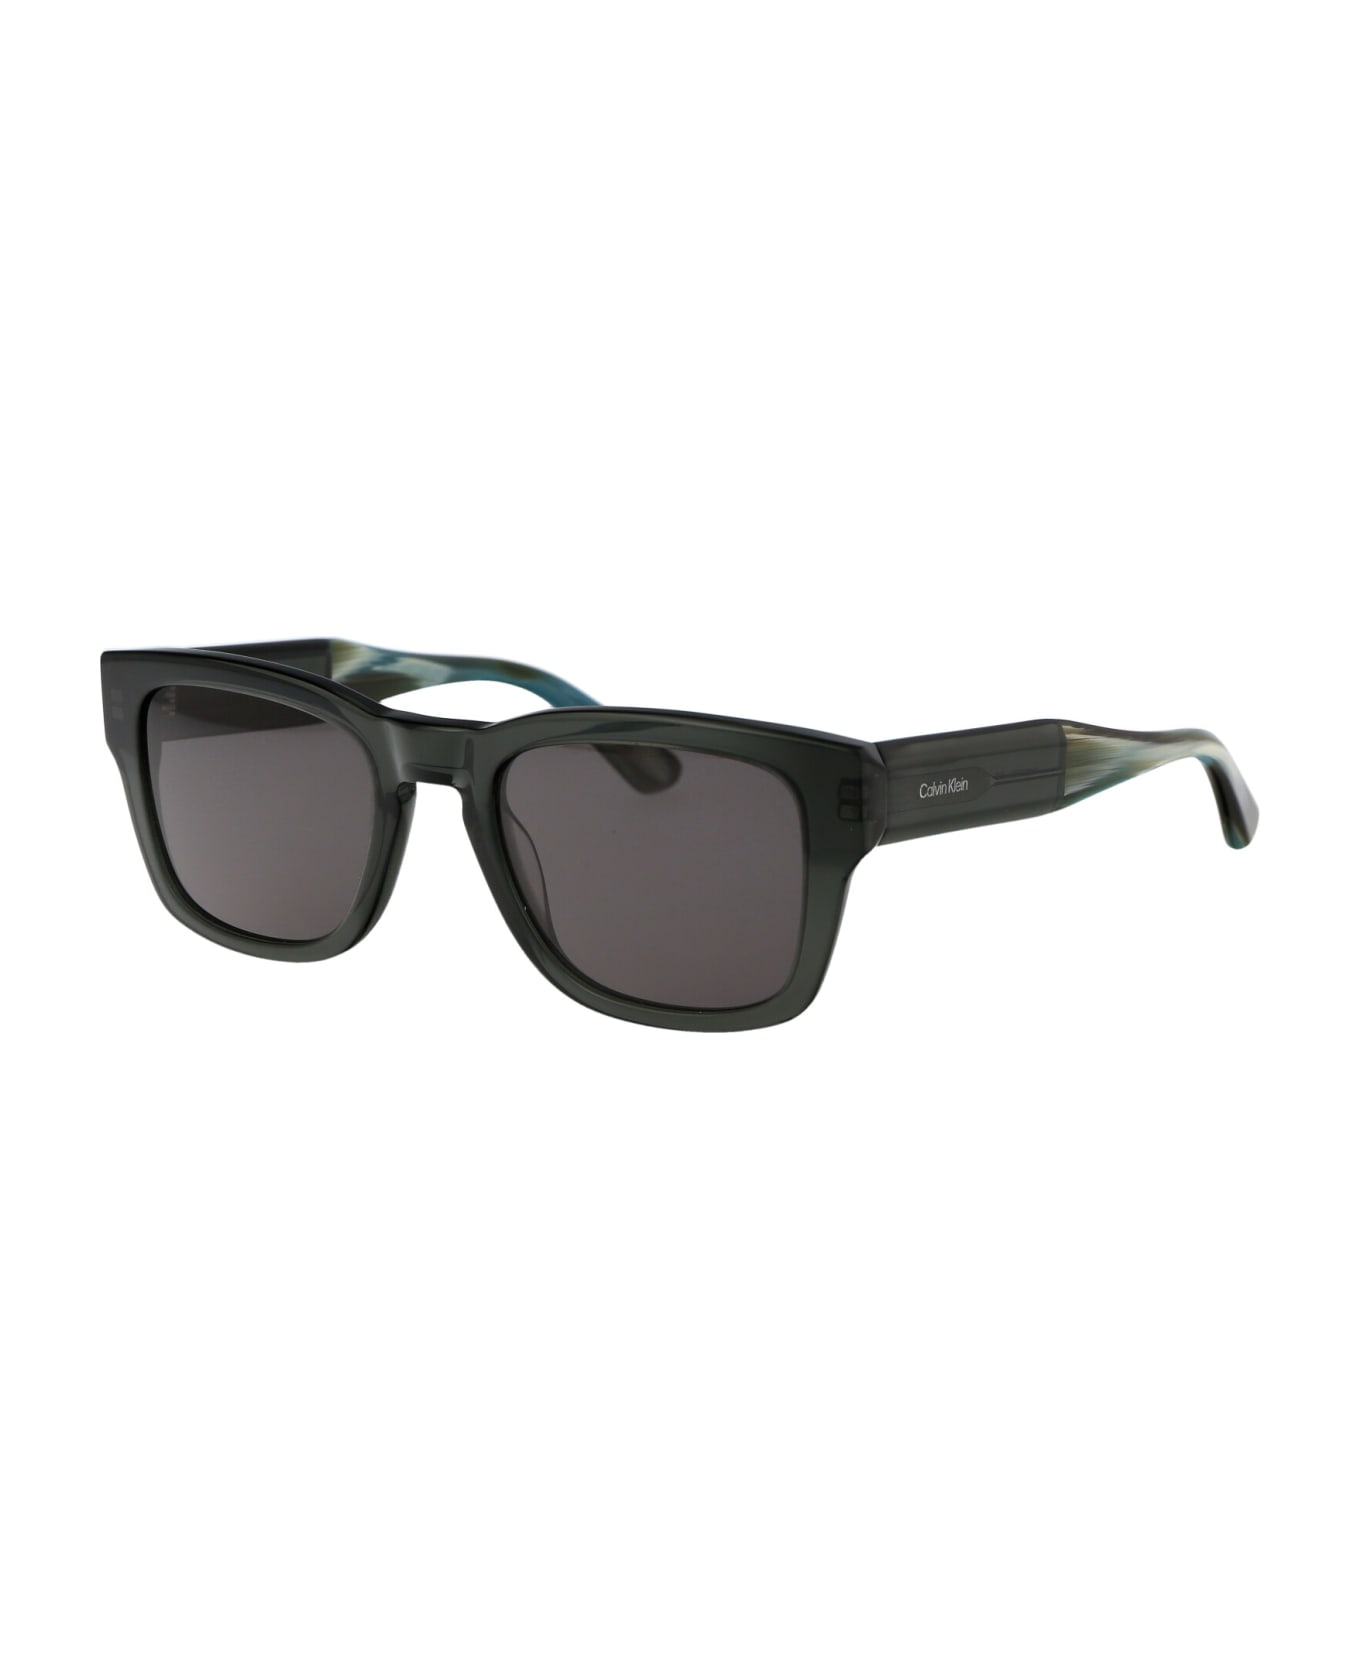 Calvin Klein Ck23539s Sunglasses - 035 GREY